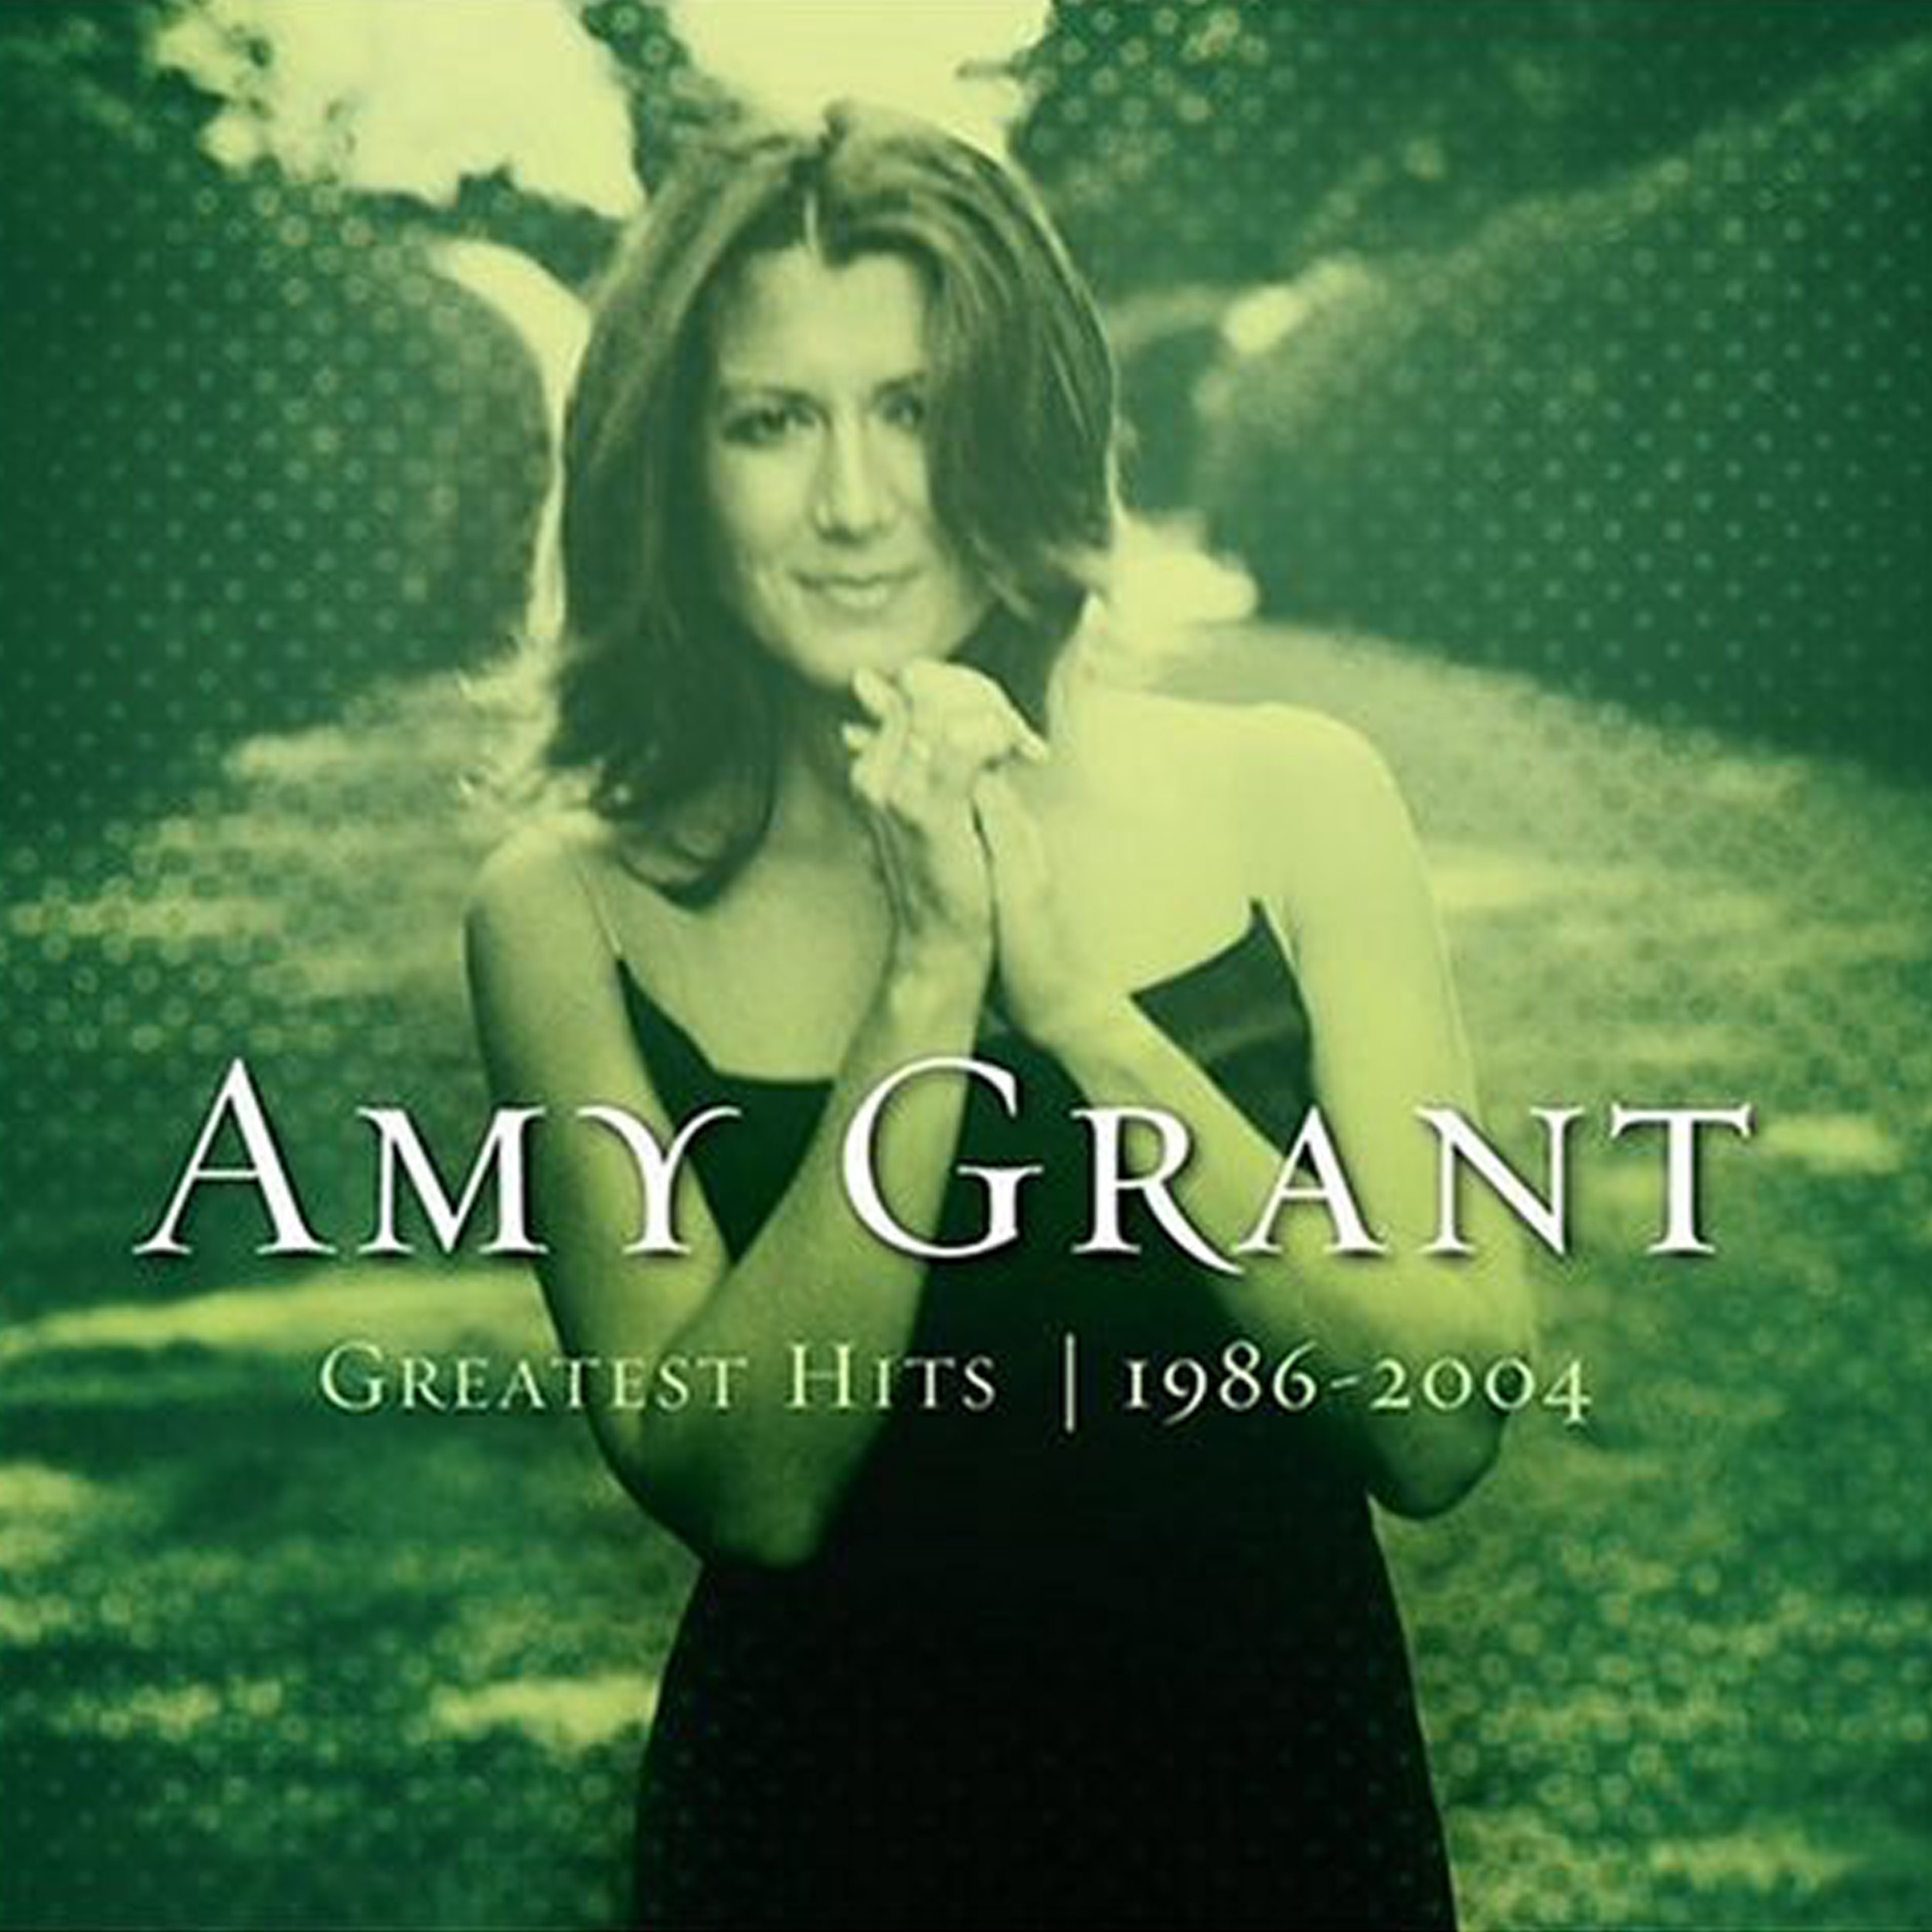 Amy Grant Greatest Hits.jpg